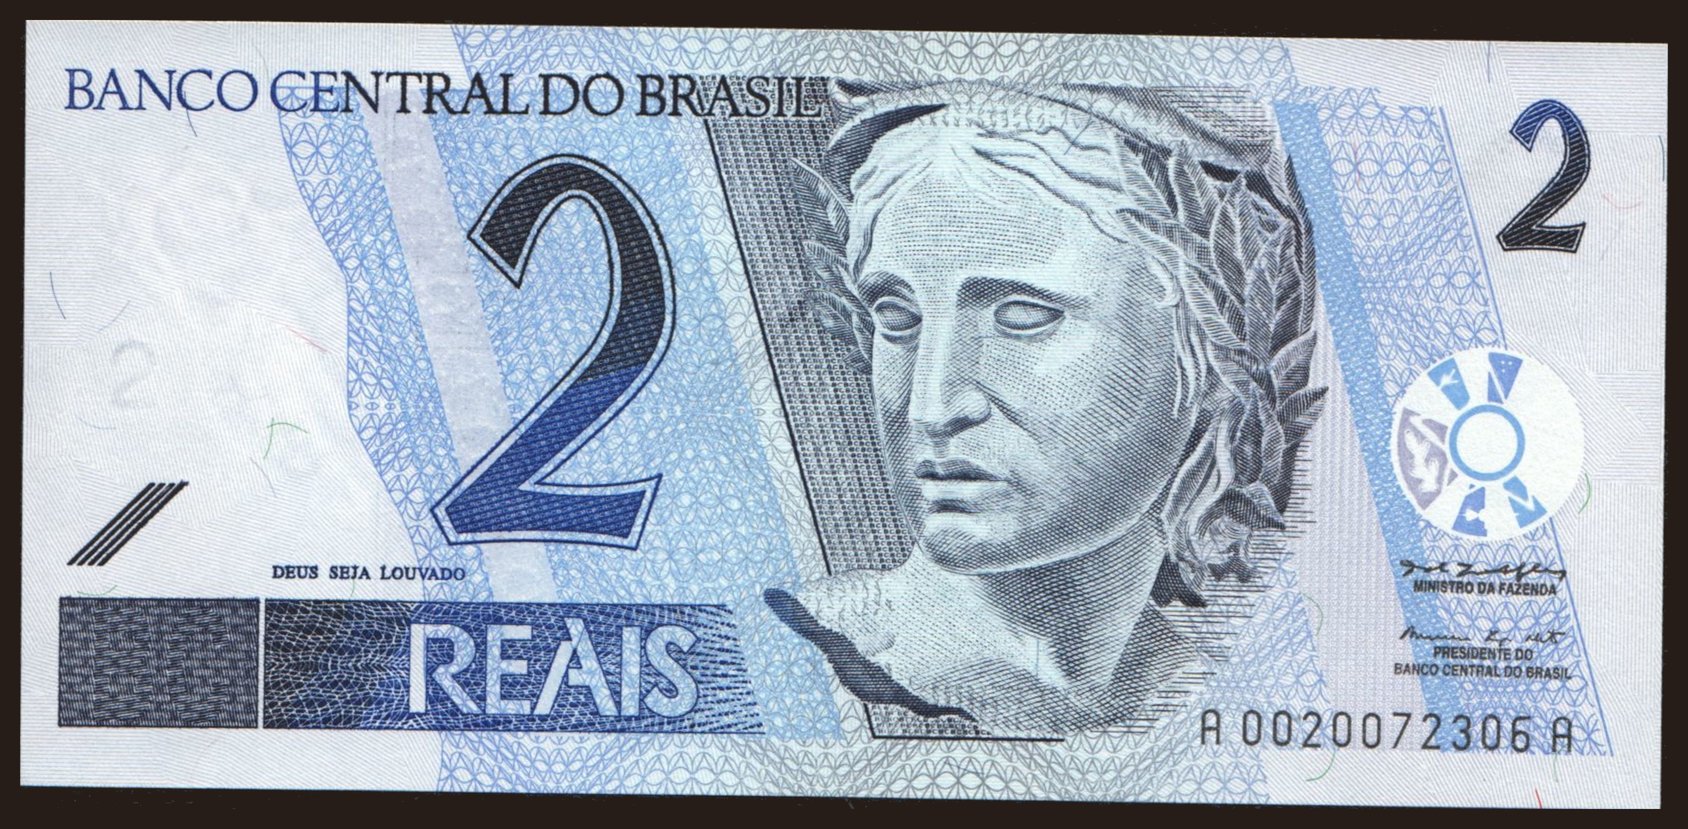 2 reais, 2001